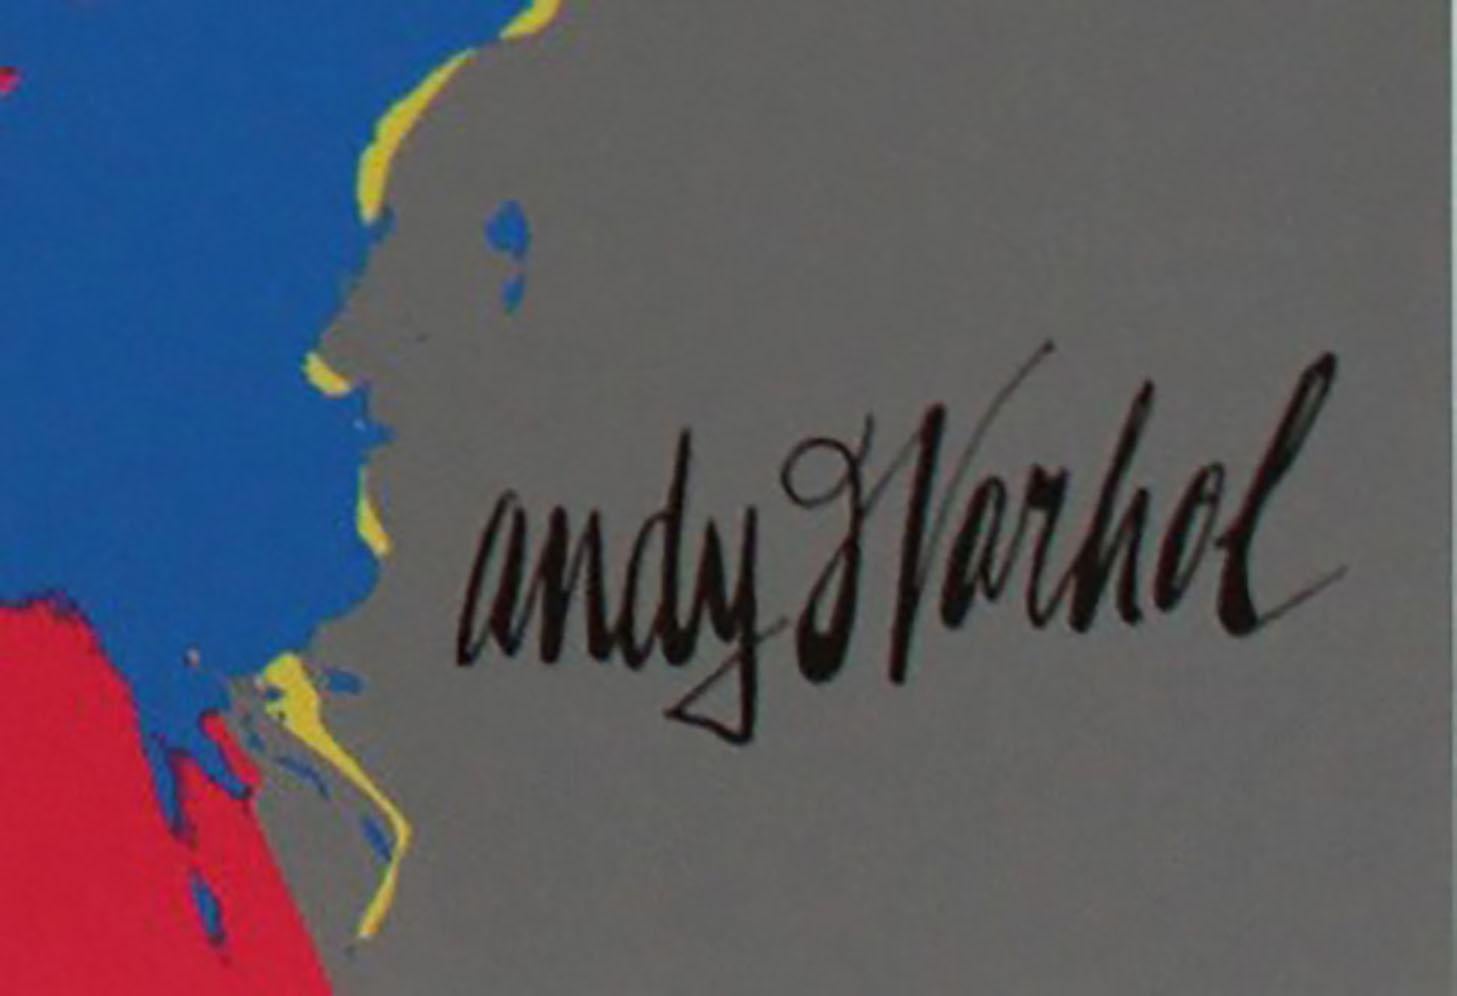  Andy Warhol MARILYN MONROE - 1967 -  baby blue 1